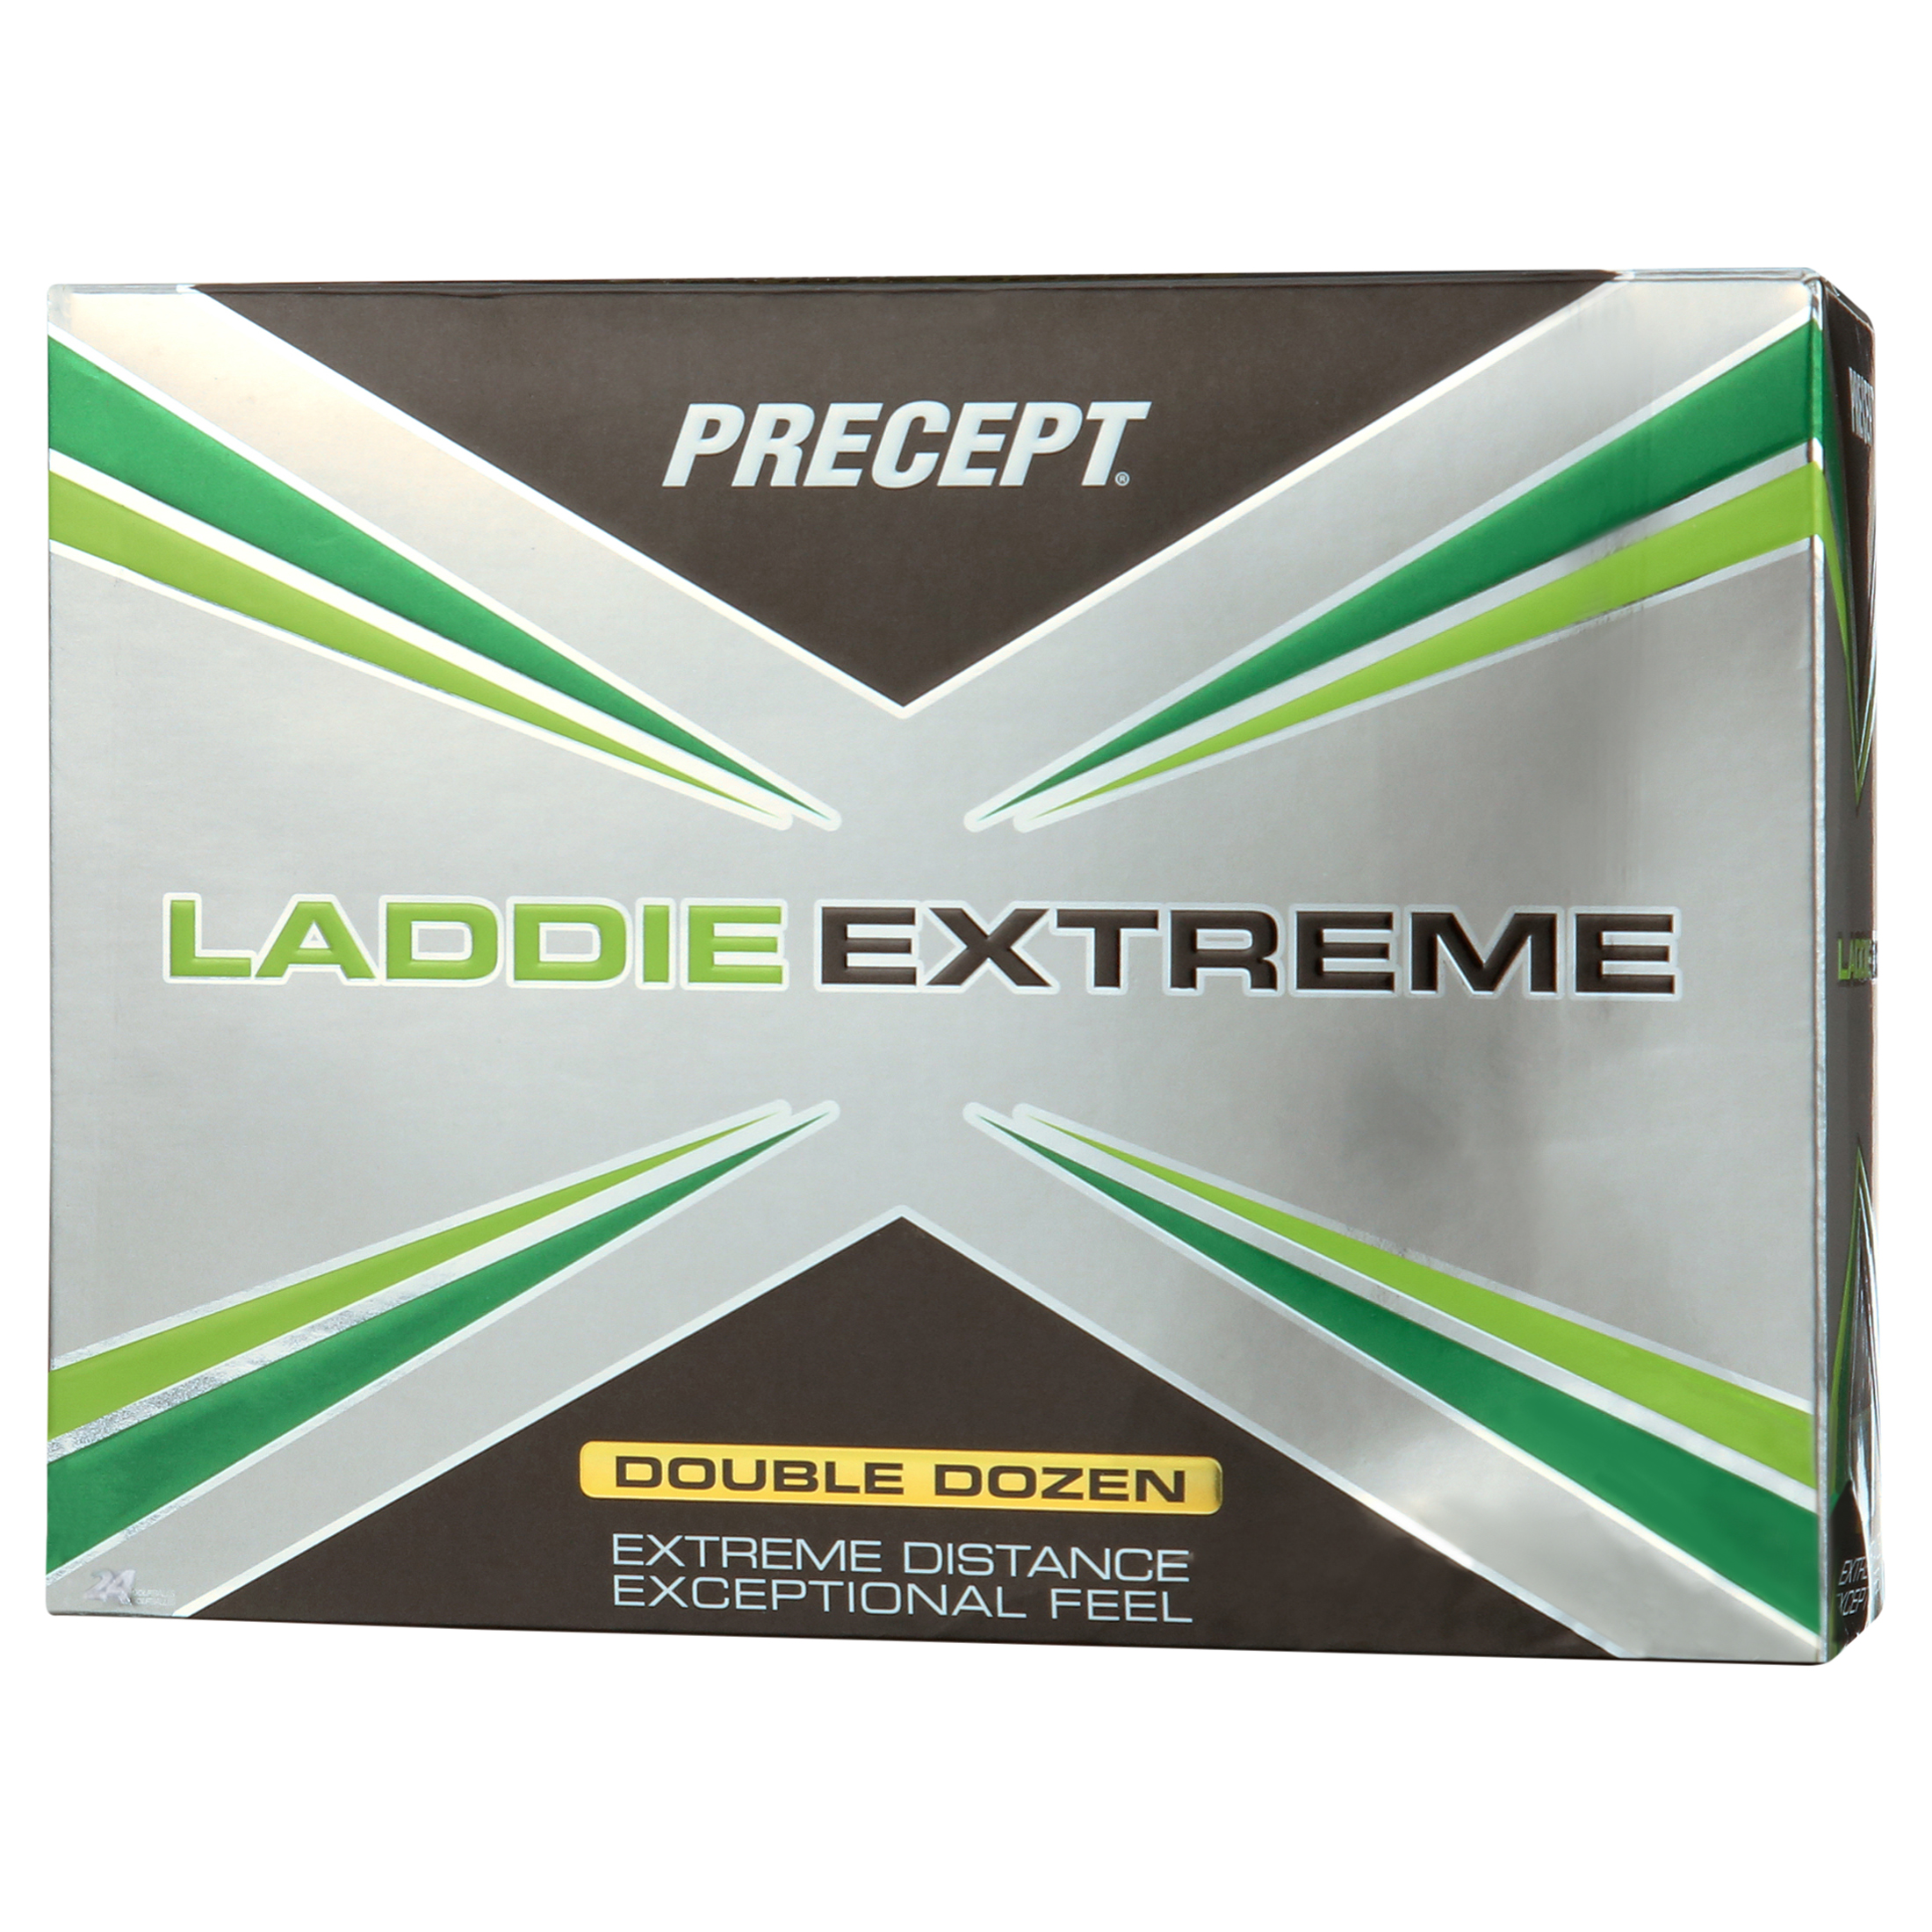 Bridgestone Golf 2017 Precept Laddie Extreme Golf Balls, Prior Generation, 24 Pack - image 4 of 5